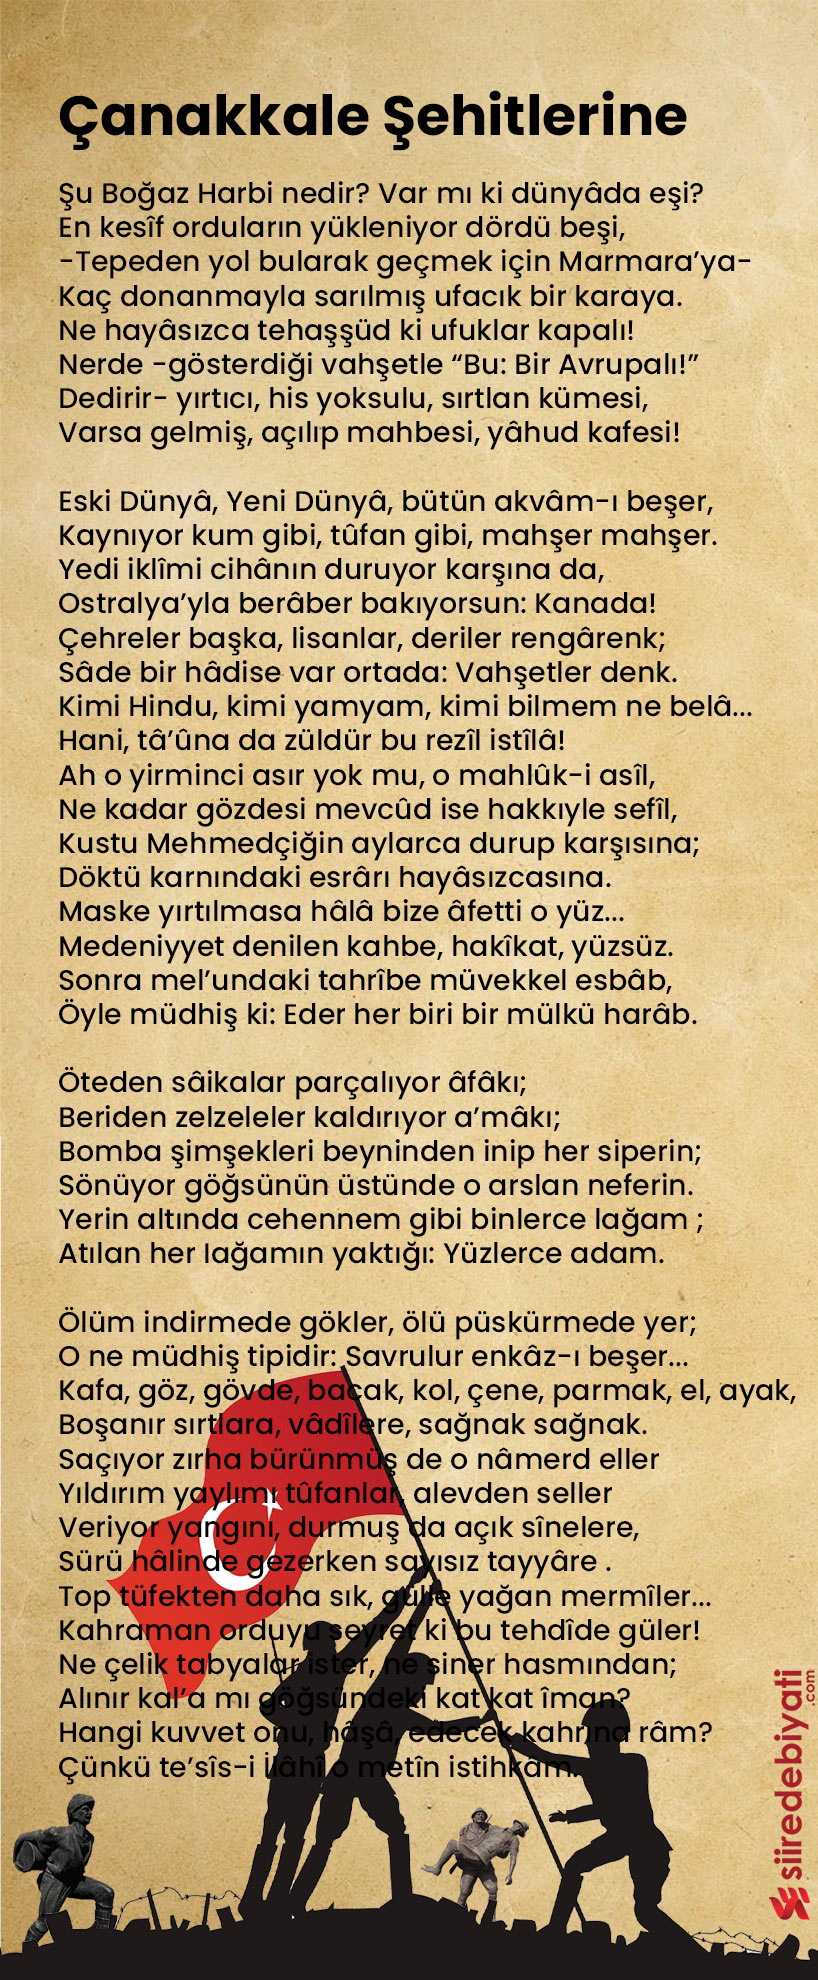 Çanakkale Şehitlerine şiiri - Mehmet Akif Ersoy